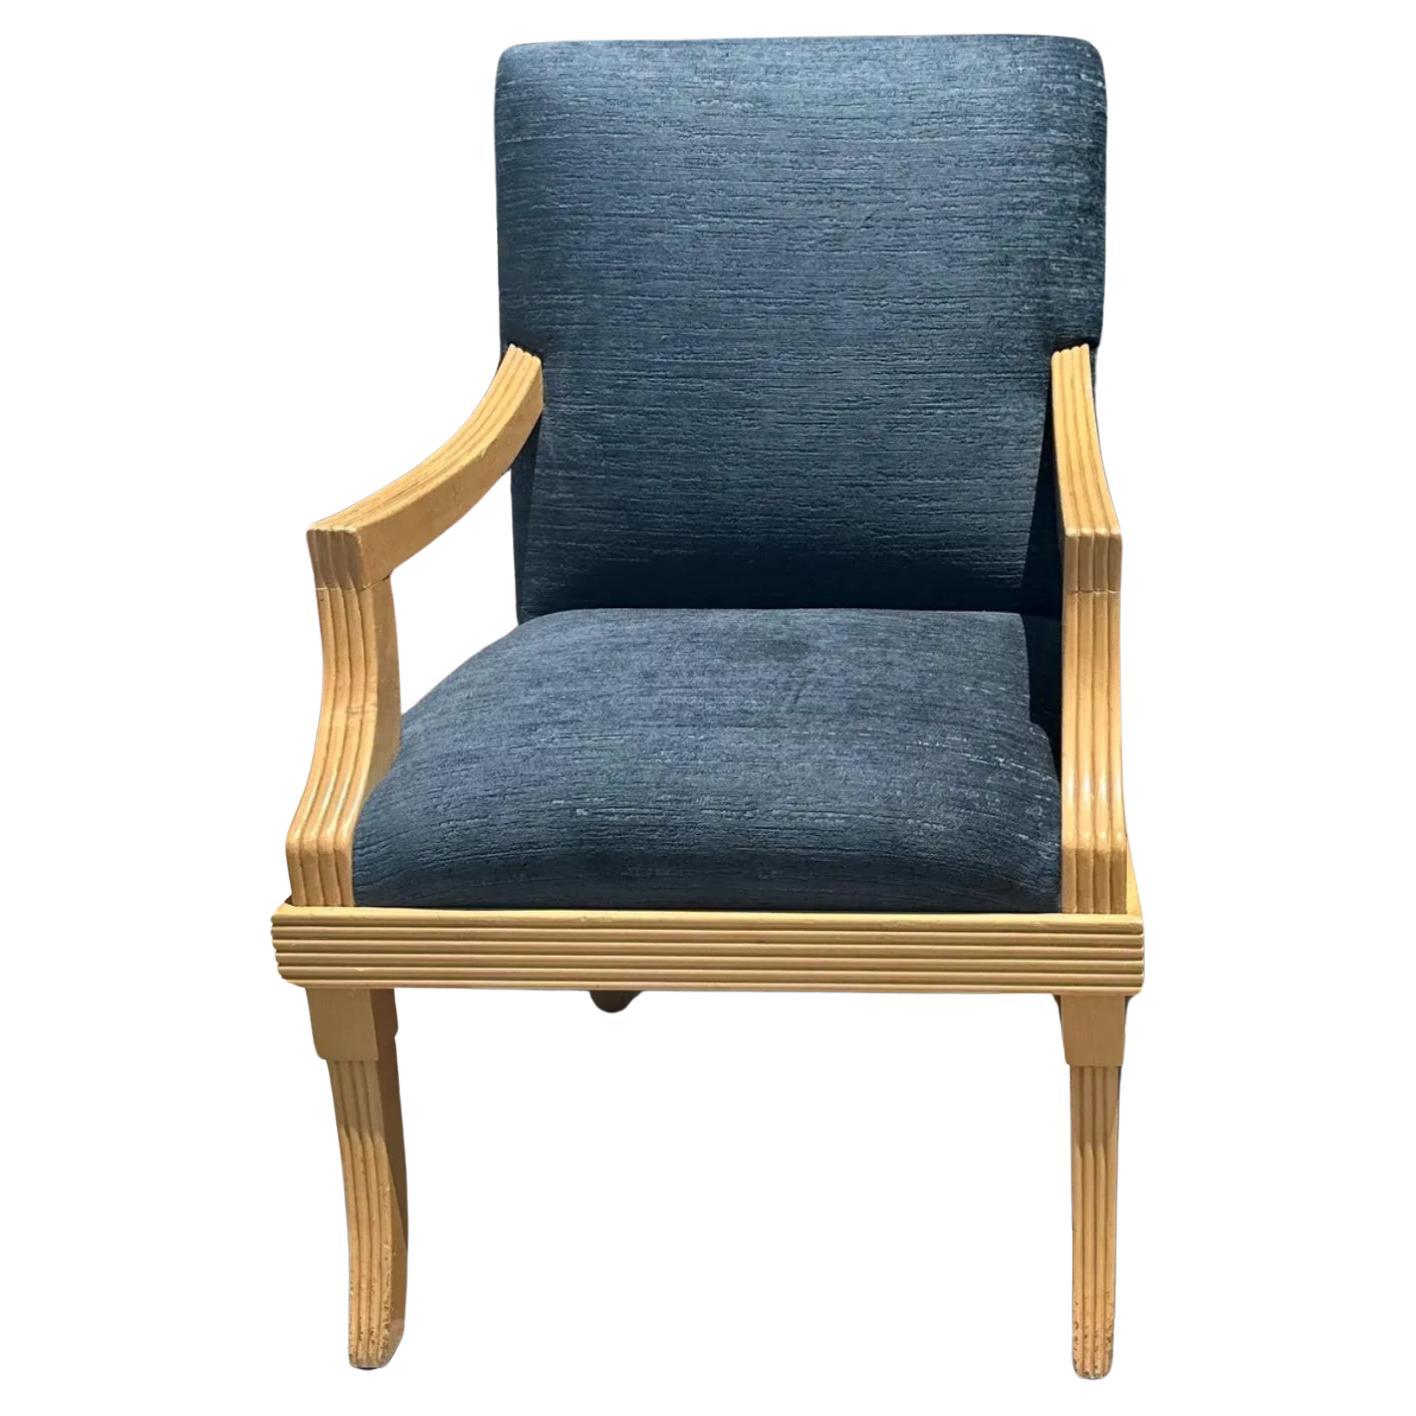 Sally Sirkin Lewis for J. Robert Scott Art Deco Arm Chair